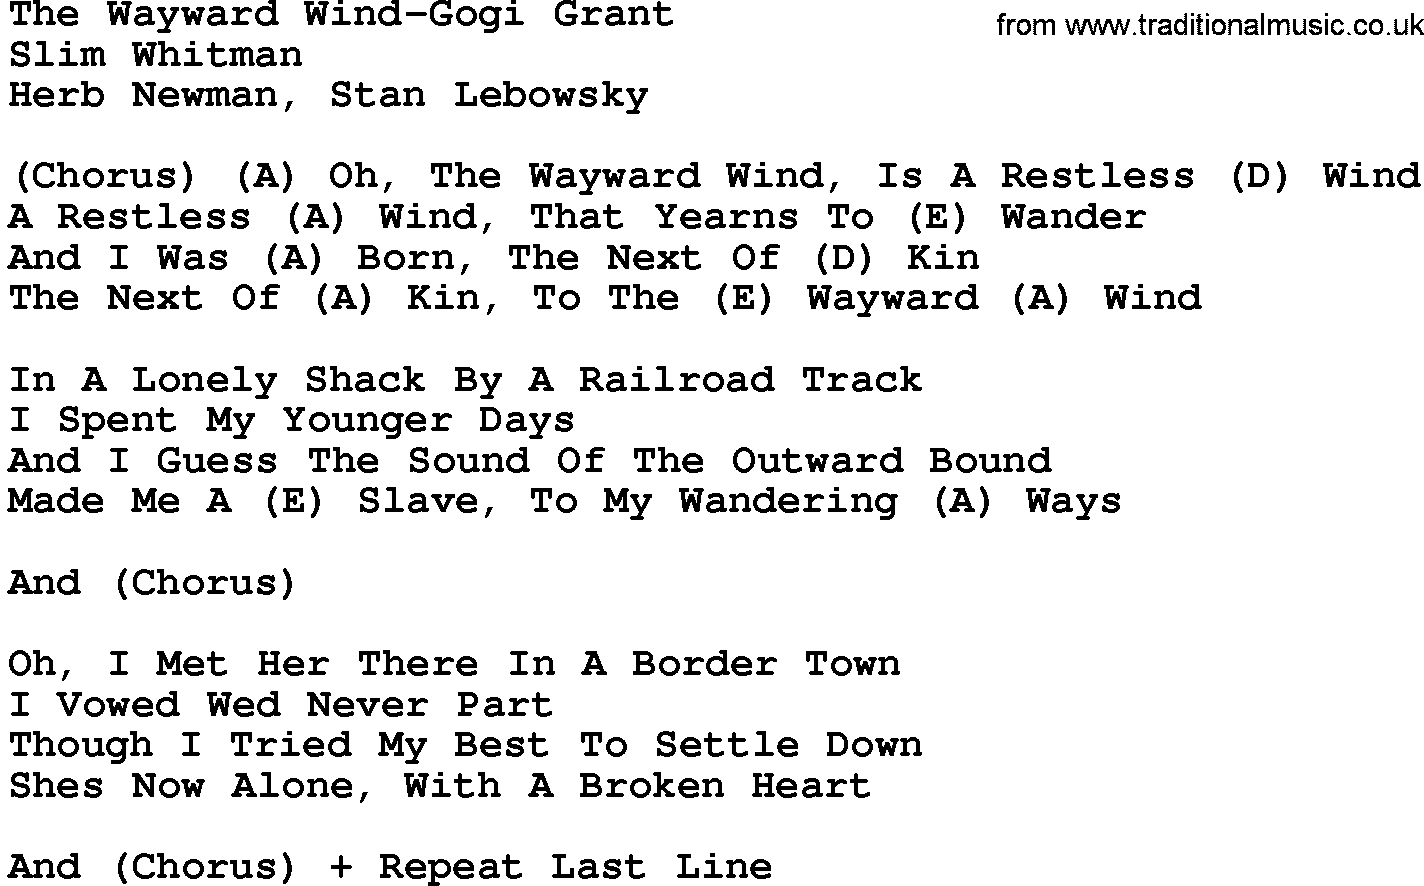 Country music song: The Wayward Wind-Gogi Grant lyrics and chords